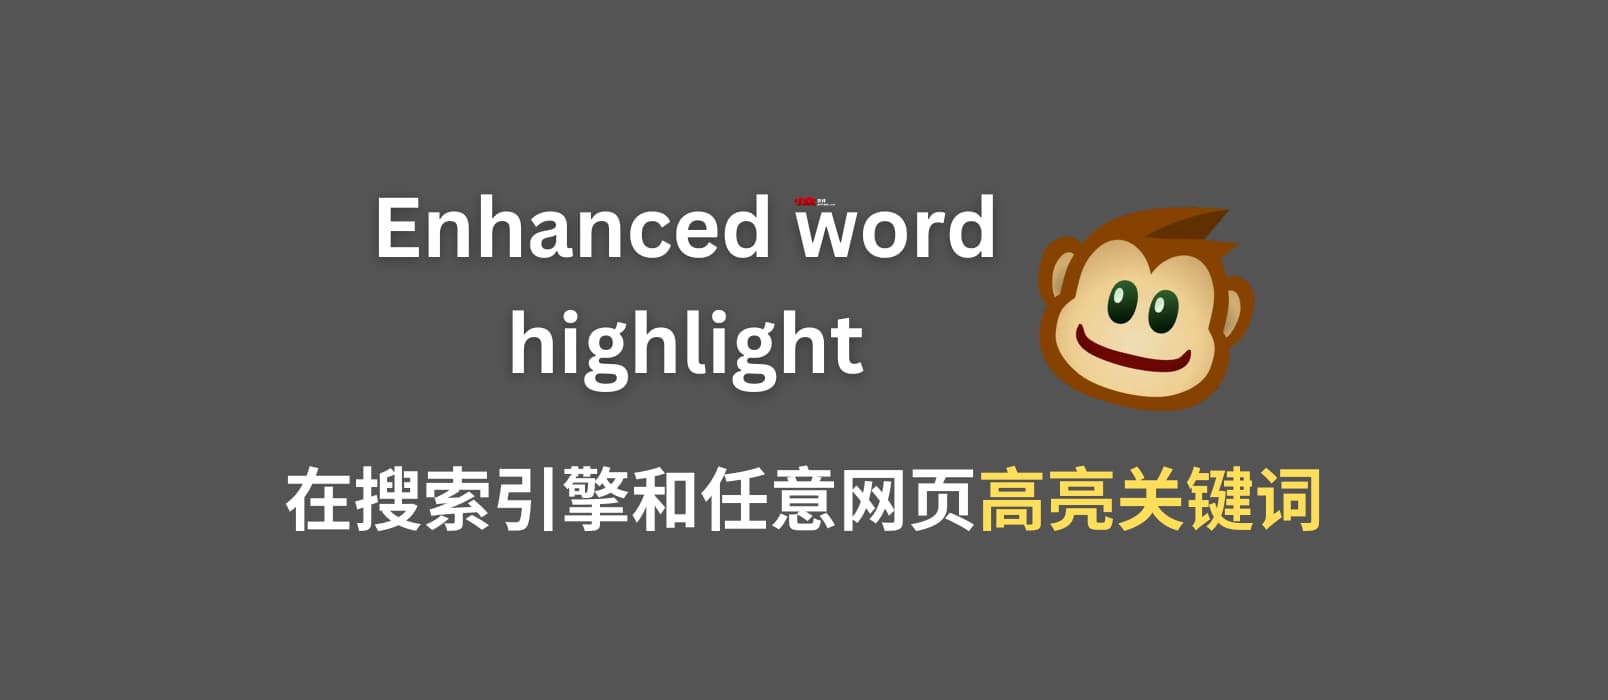 Enhanced word highlight - 创建10年的油猴脚本又更新了：在搜索引擎和网页高亮关键词